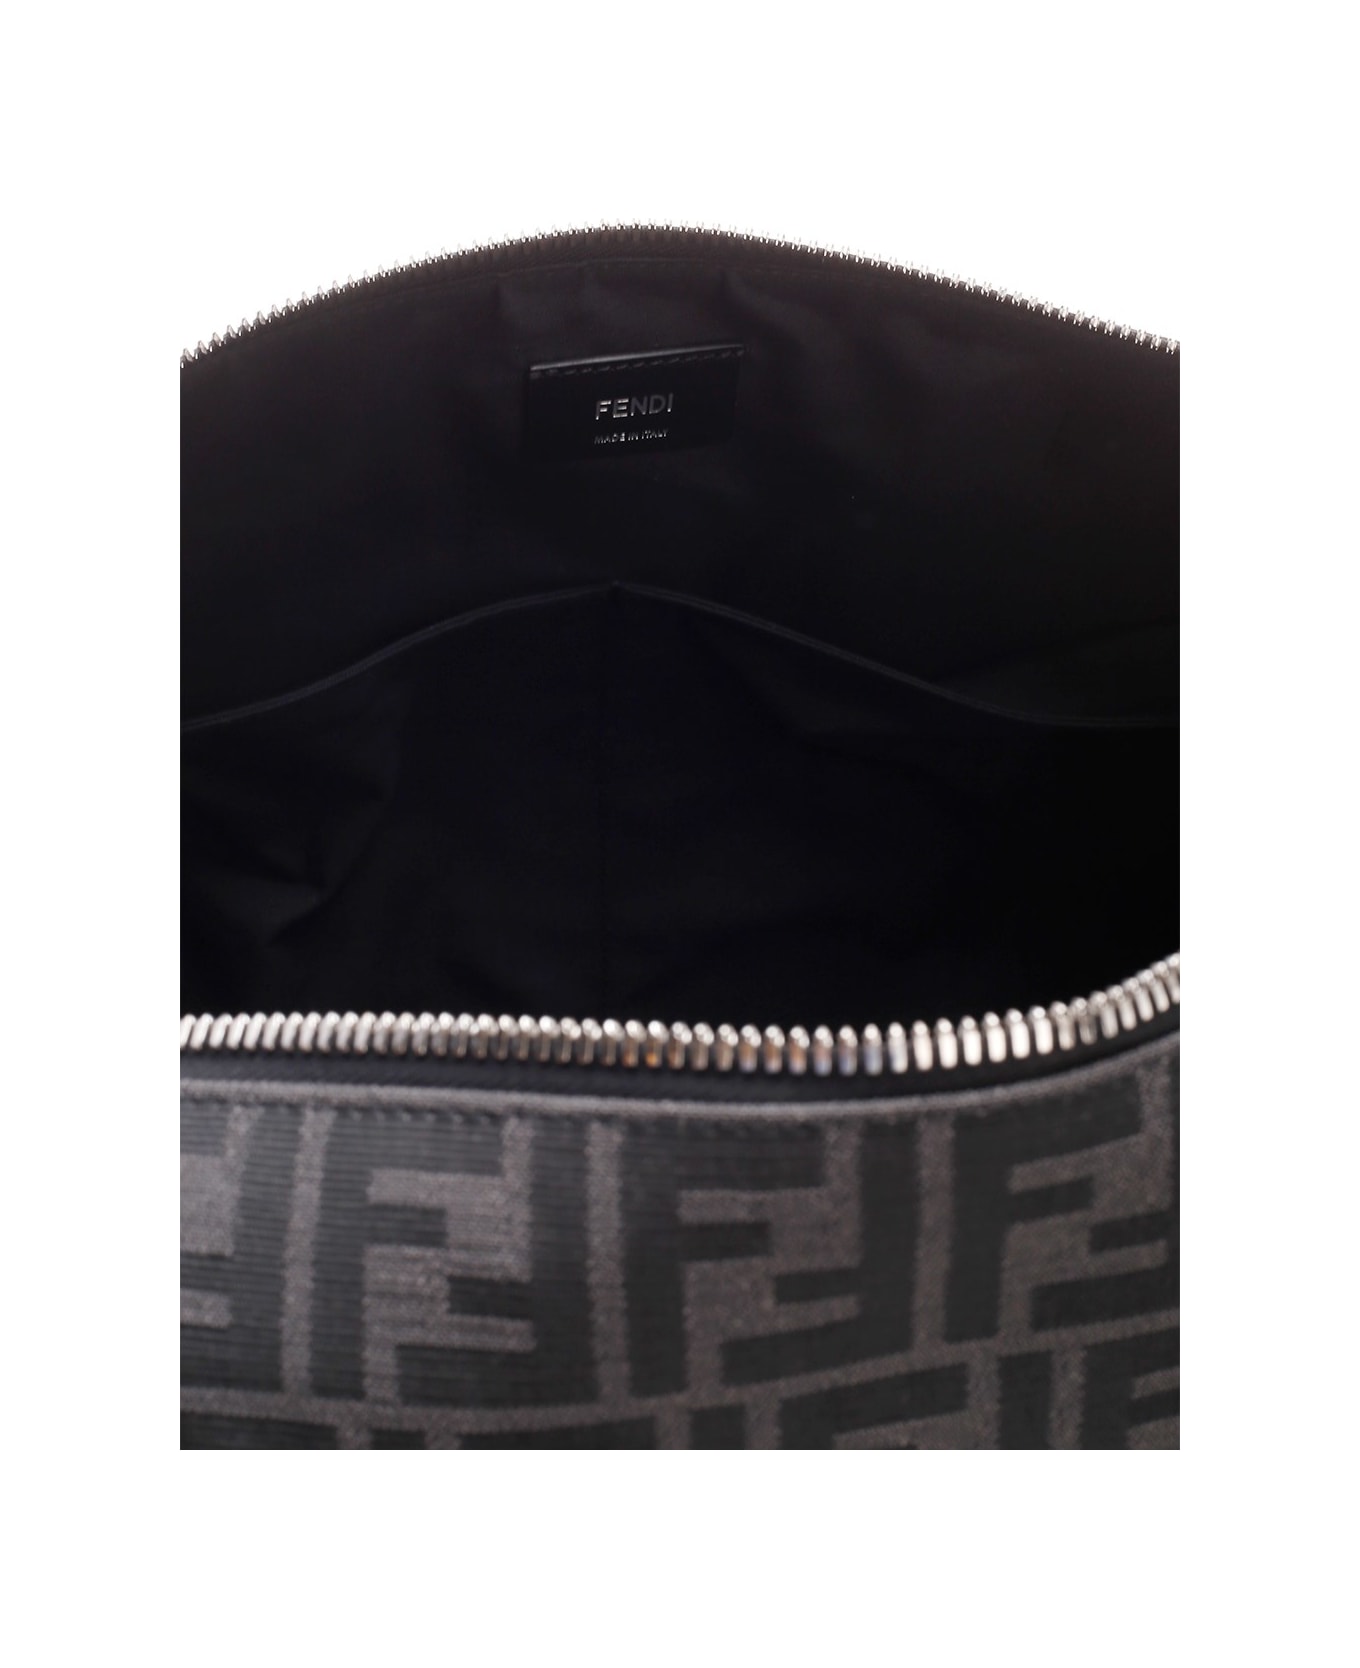 Fendi Travel Bag With All-over "ff" Monogram - Grey